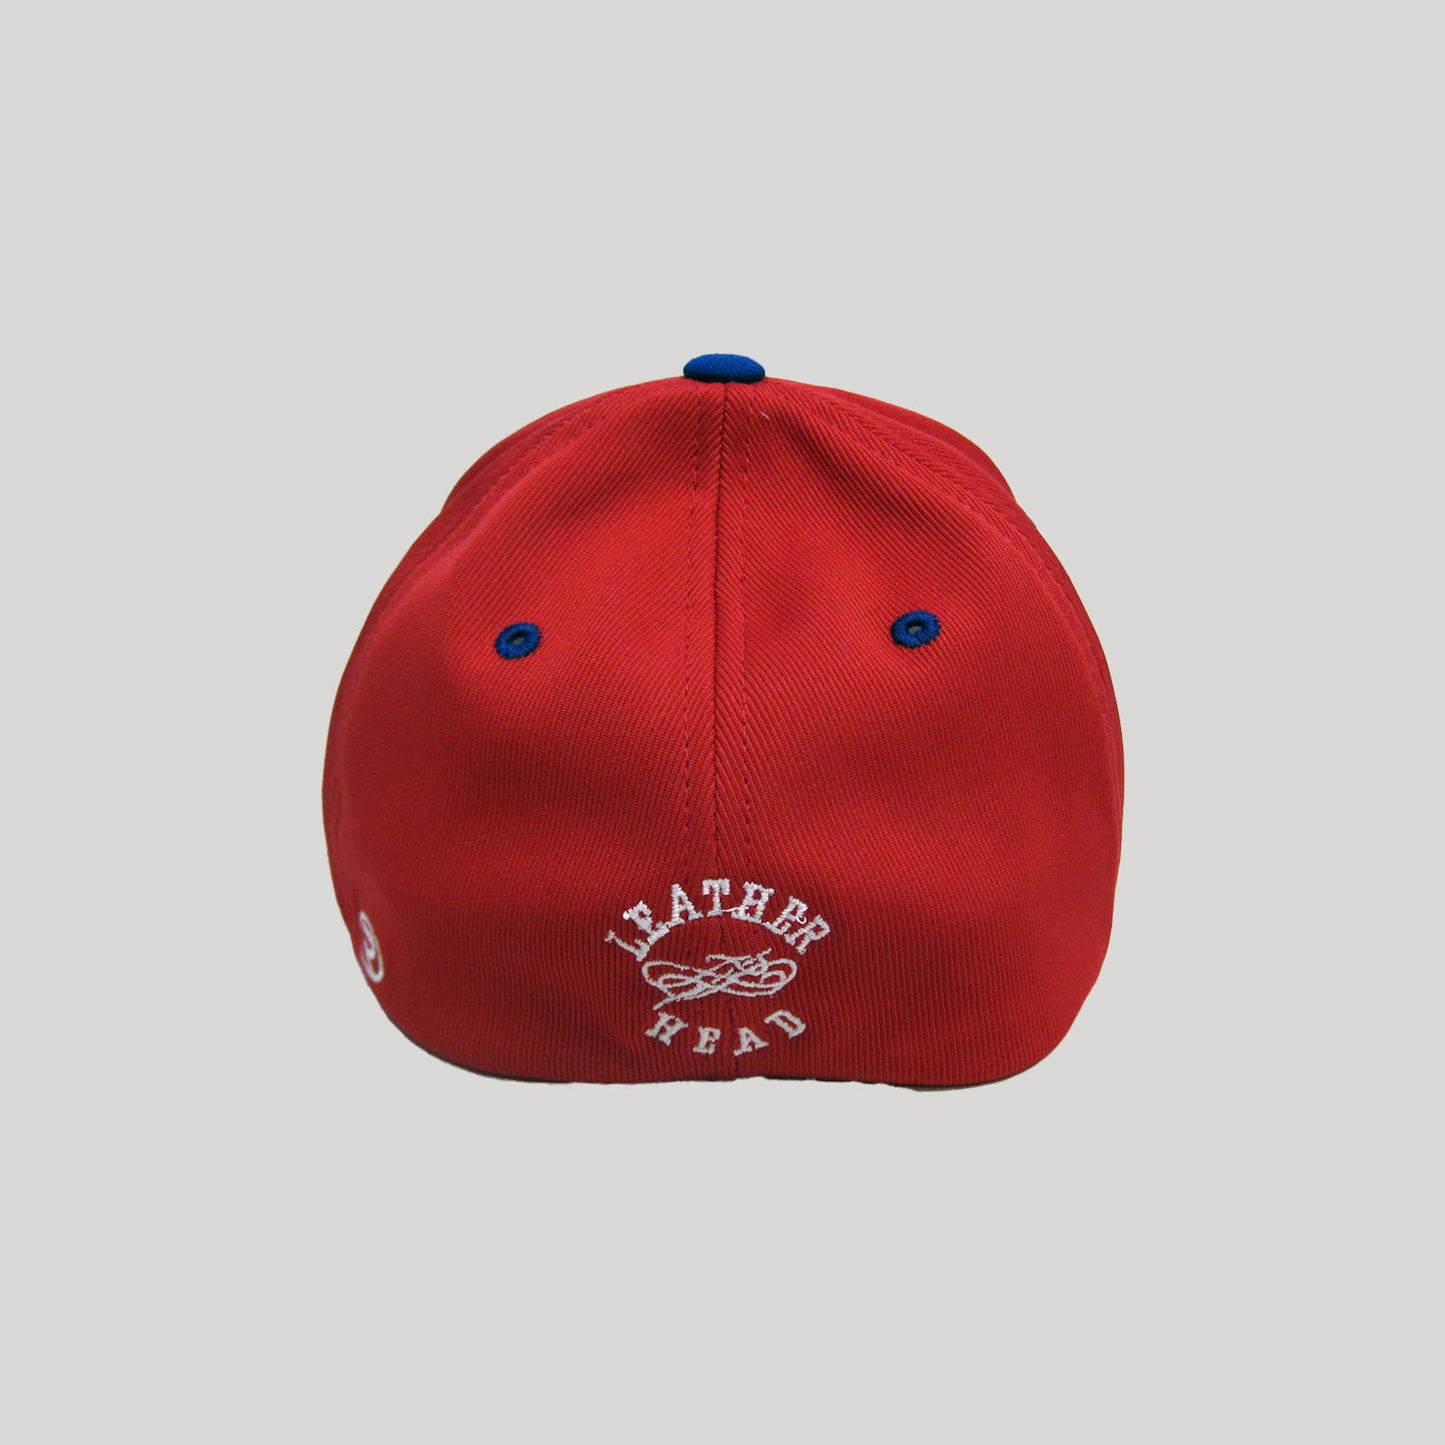 
                  
                    Leather Head red, white and blue baseball cap  BASEBALL HAT - RWB
                  
                